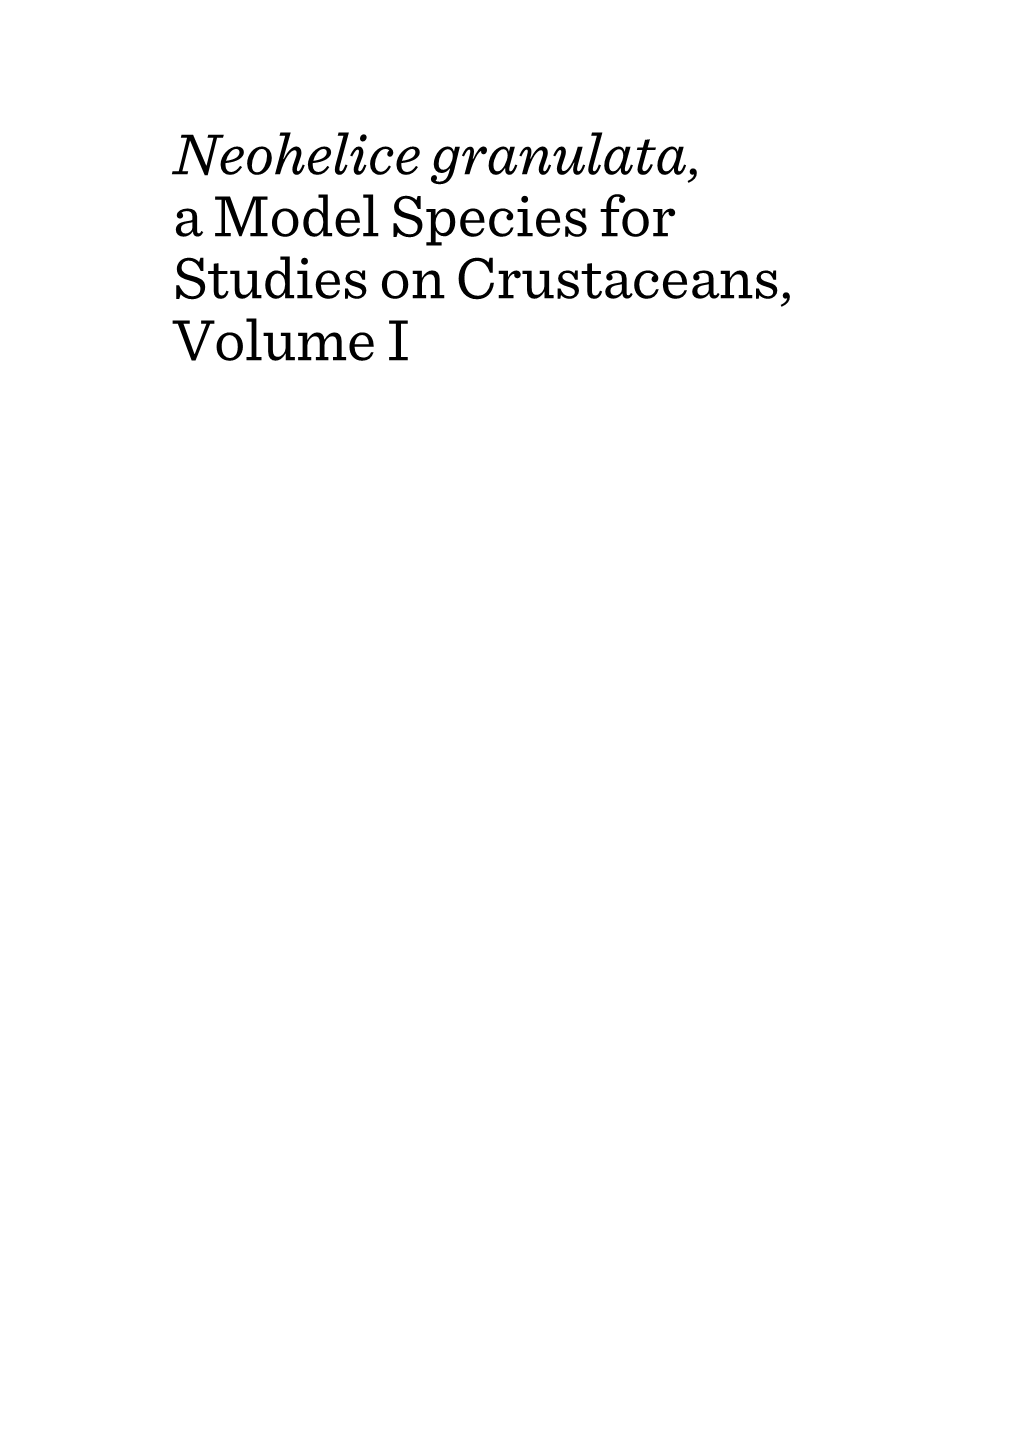 Neohelice Granulata, a Model Species for Studies on Crustaceans, Volume I